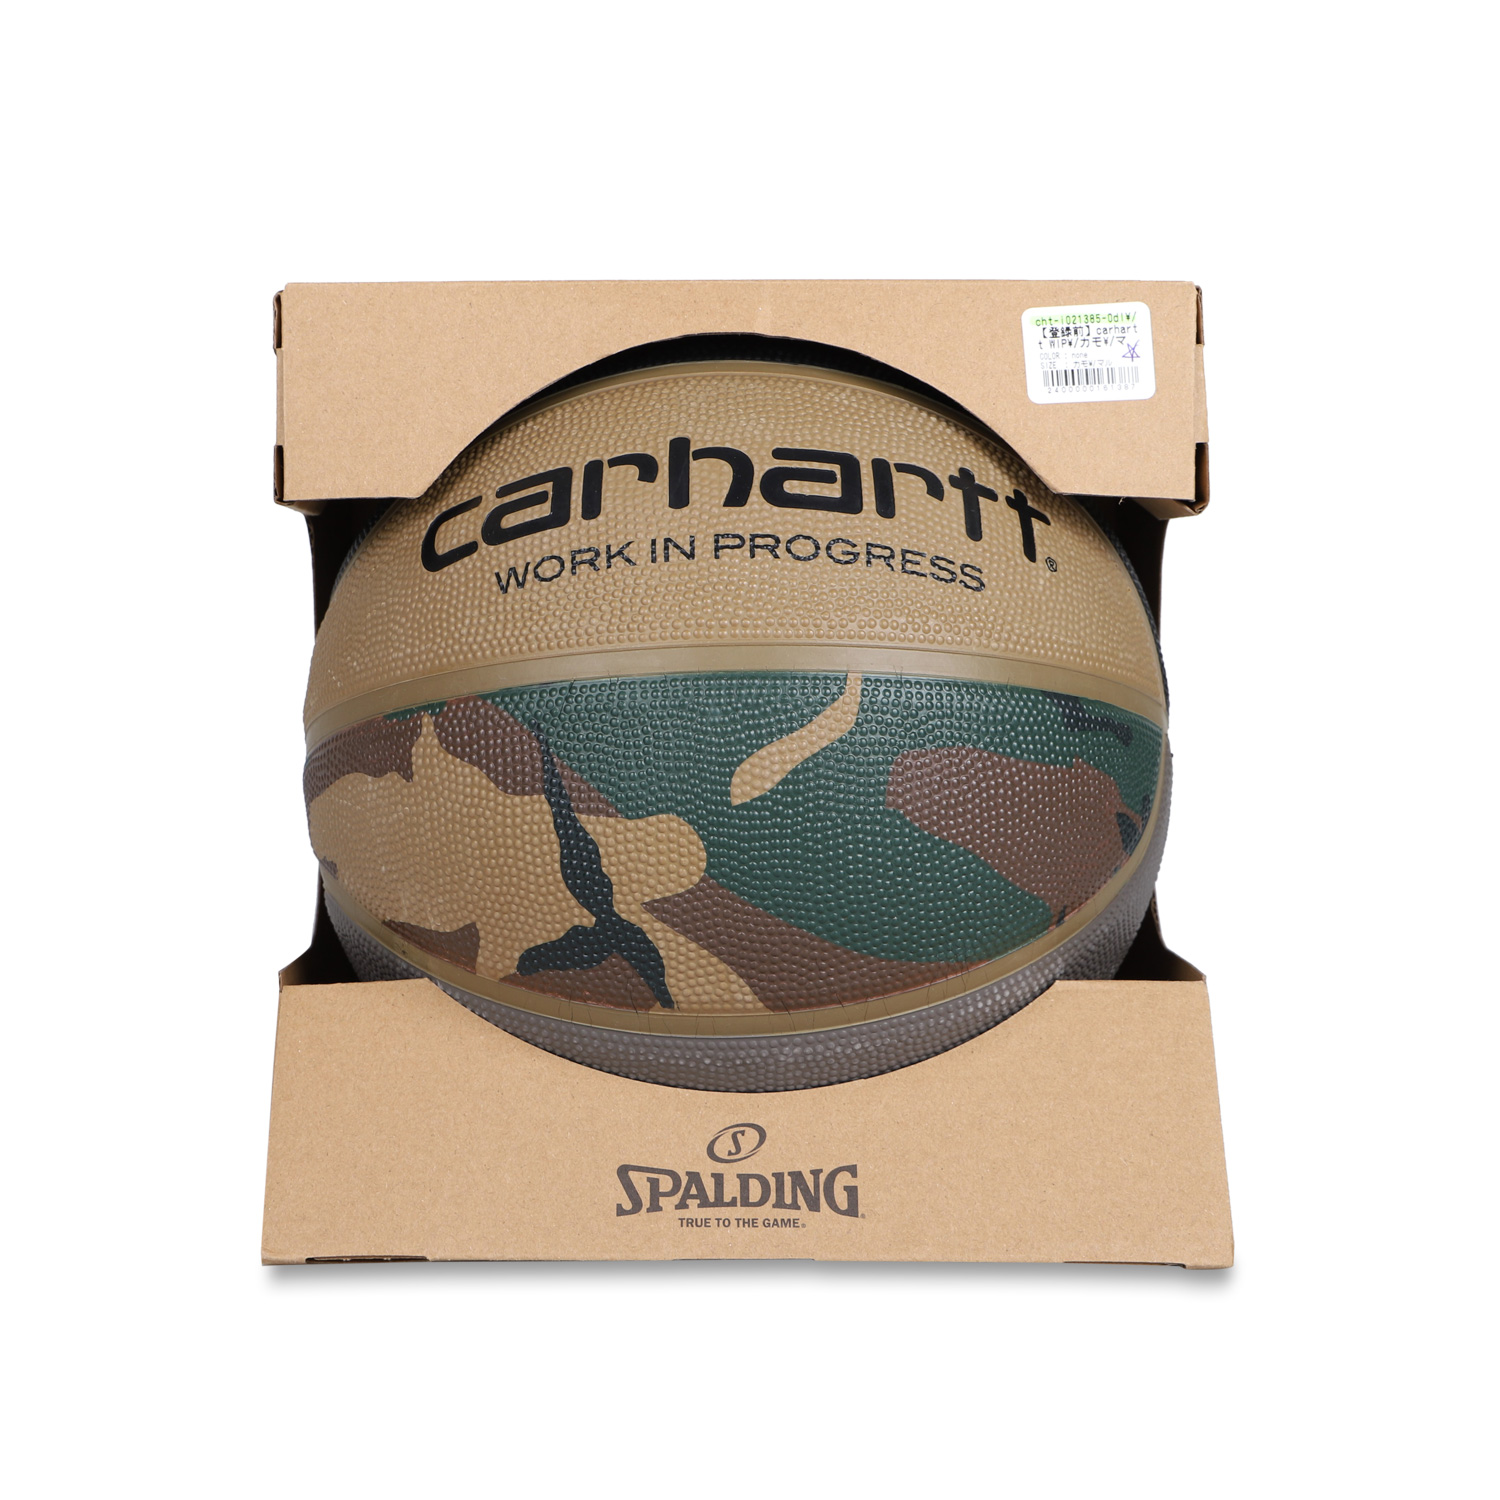 Carhartt Wip Spalding Valiant 4 Basketball カーハート スポルディング バスケットボール 7号 外用 野外 革 コラボ マルチカラー I Sermus Es